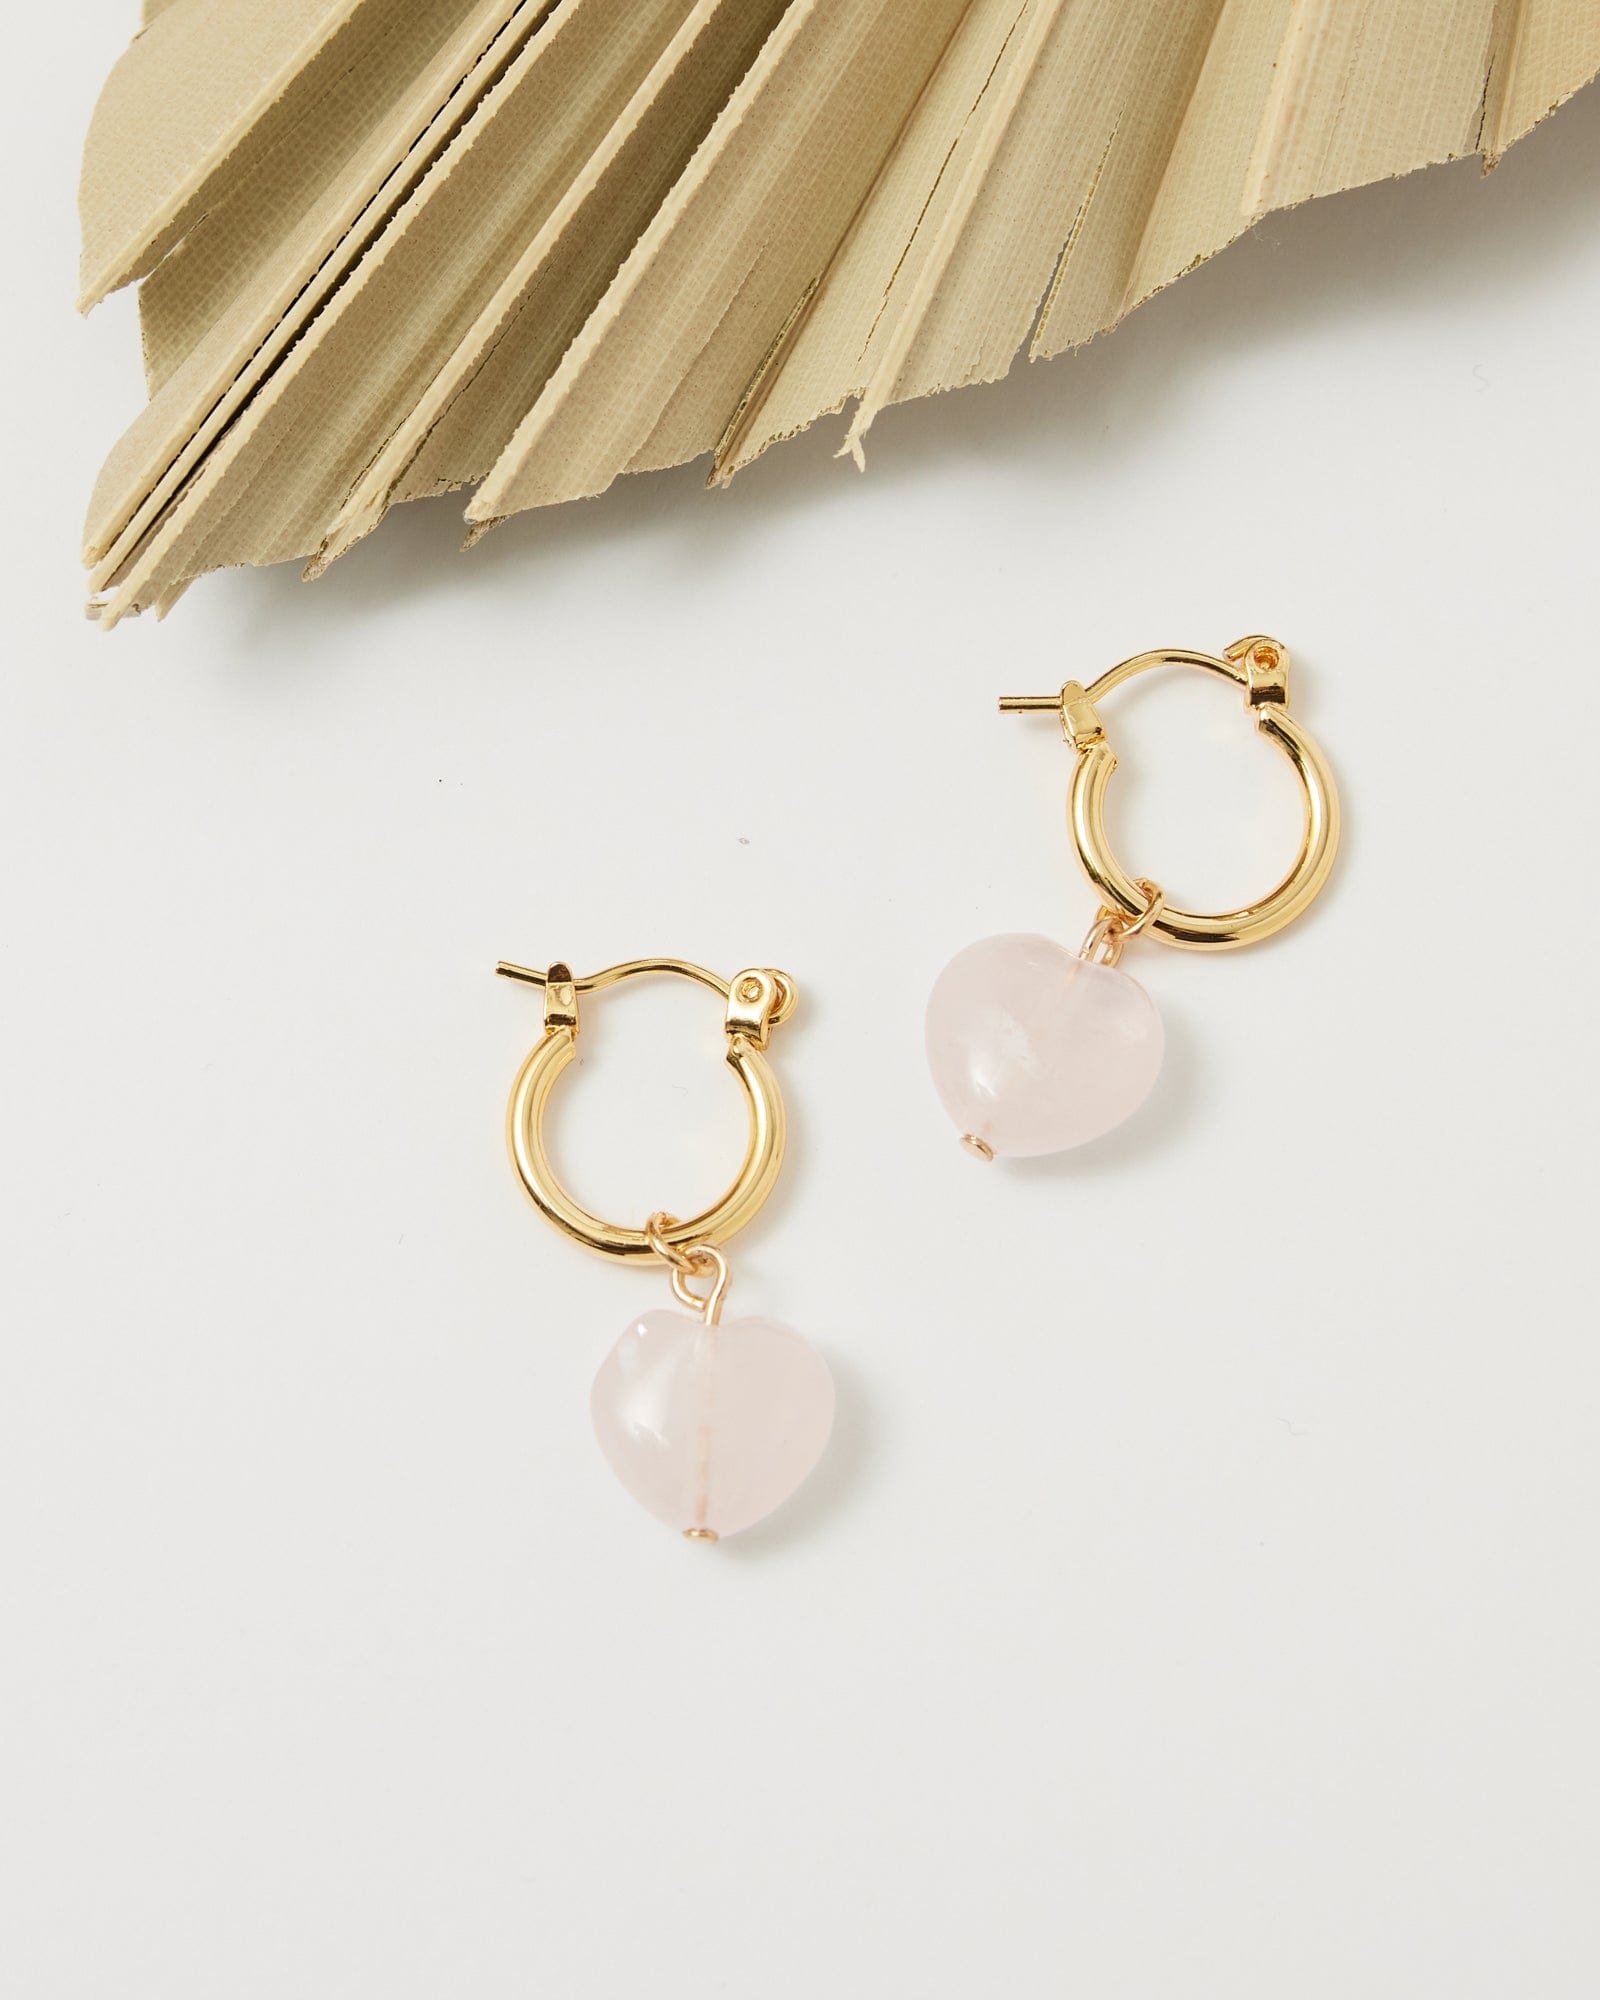 Gold huggie hoop earrings with heart shaped rose quartz bead on end.